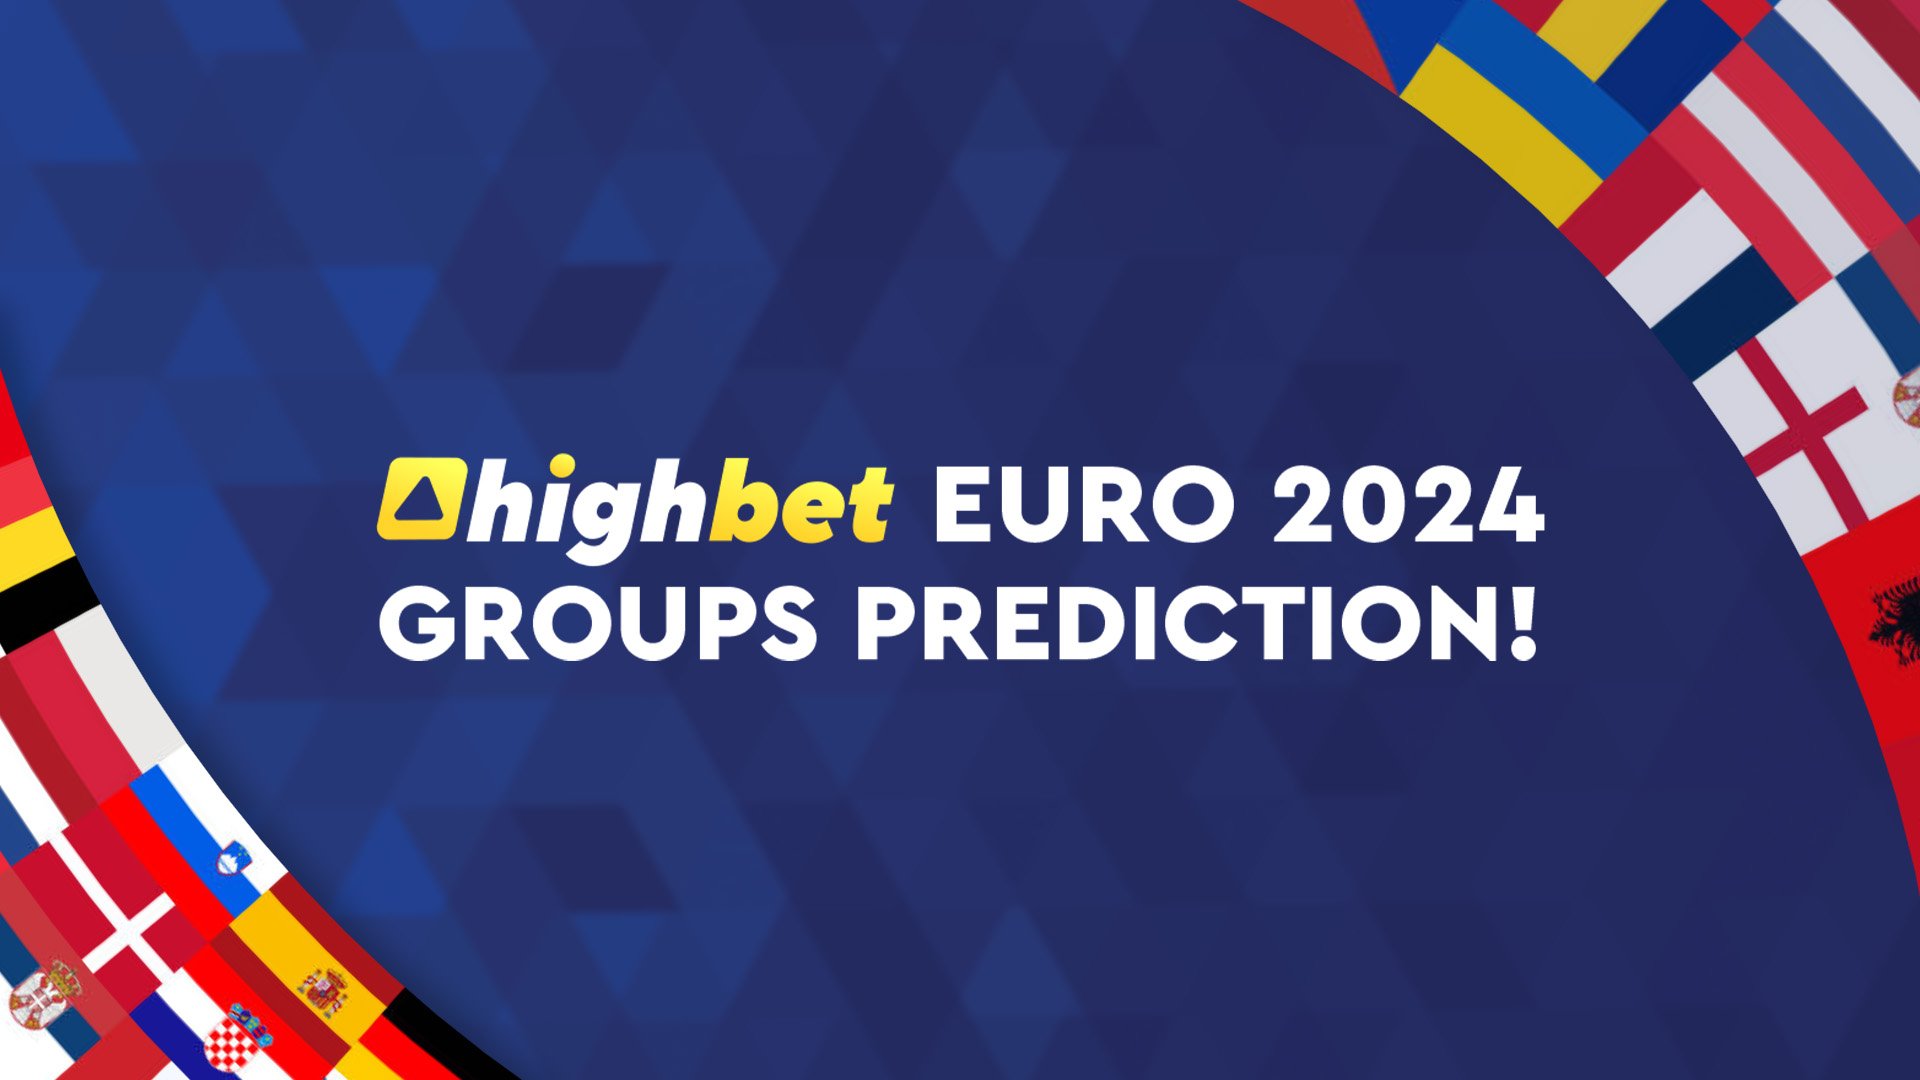 Highbet Euro 2024 Groups Prediction!